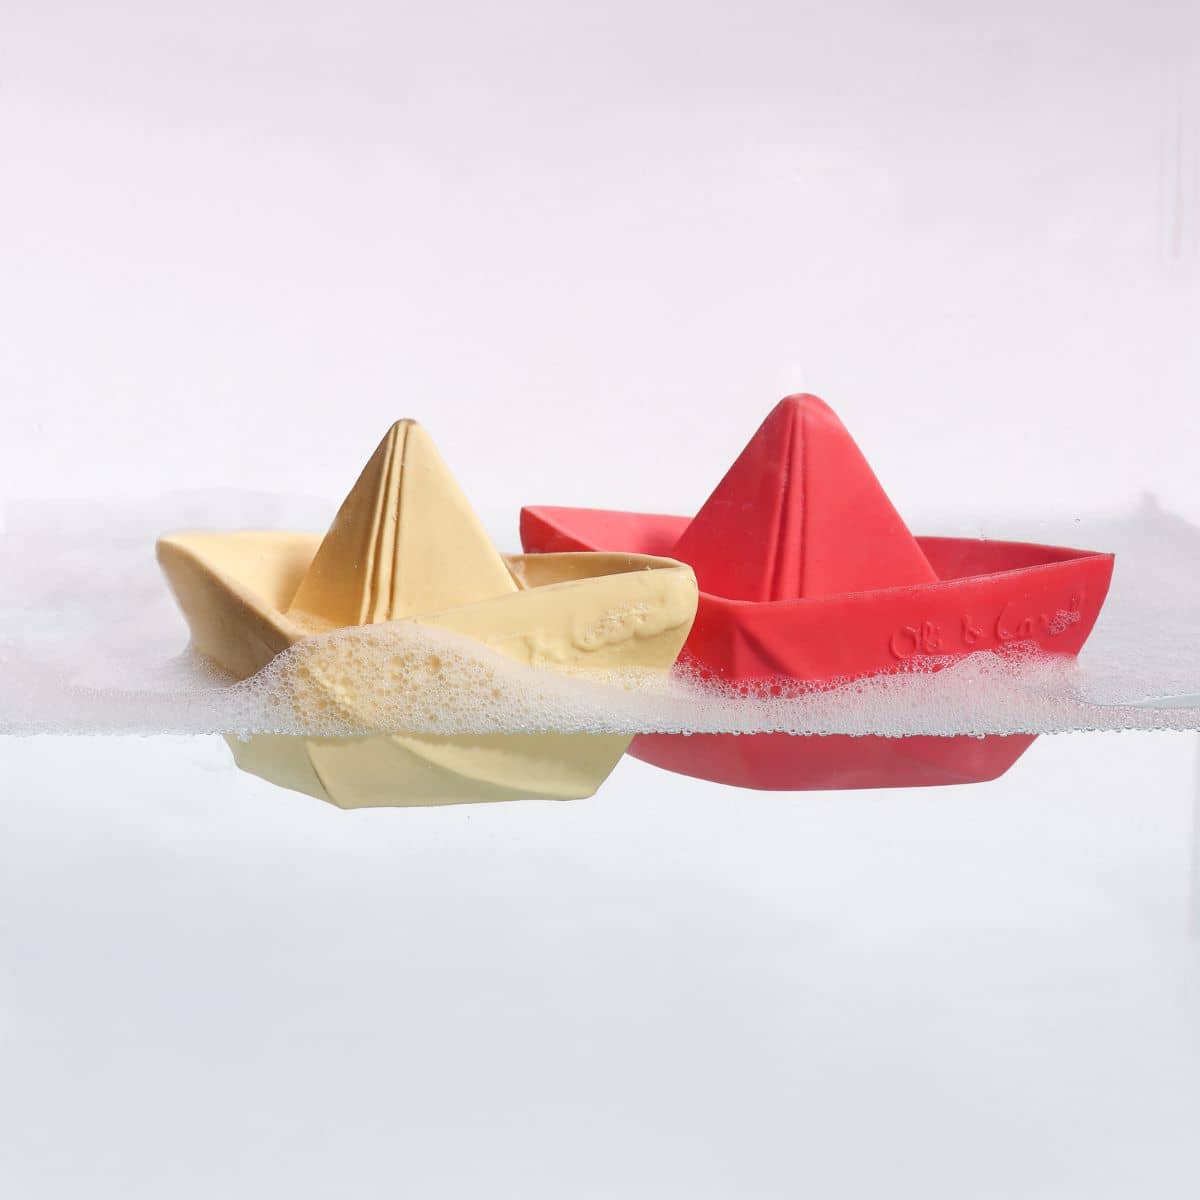 Oli & Carol Origami Boat